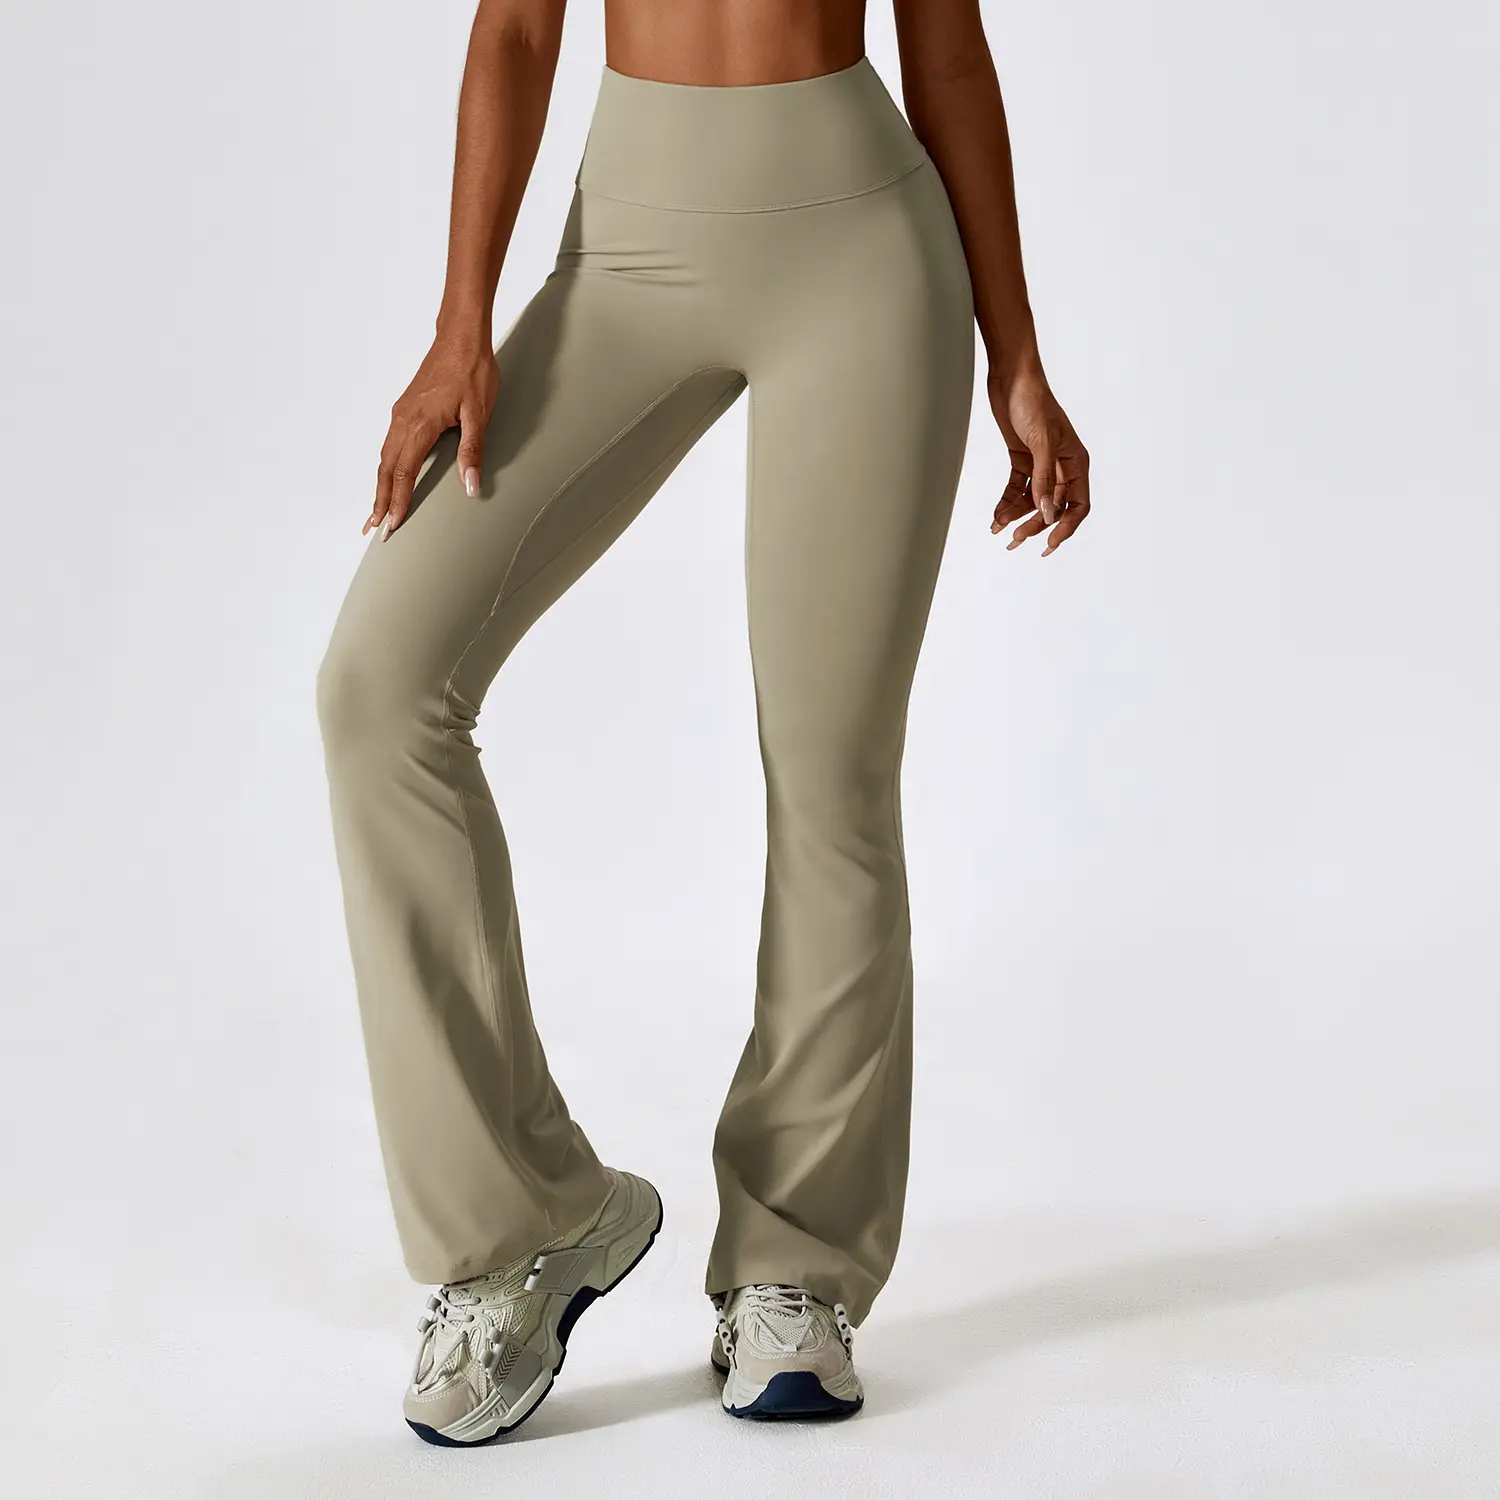 Großhandel Custom Logo Nahtlose Active wear Yoga Outfits Frauen Fitness Fitness Workout Sets Hochwertige Fitness Kleidung